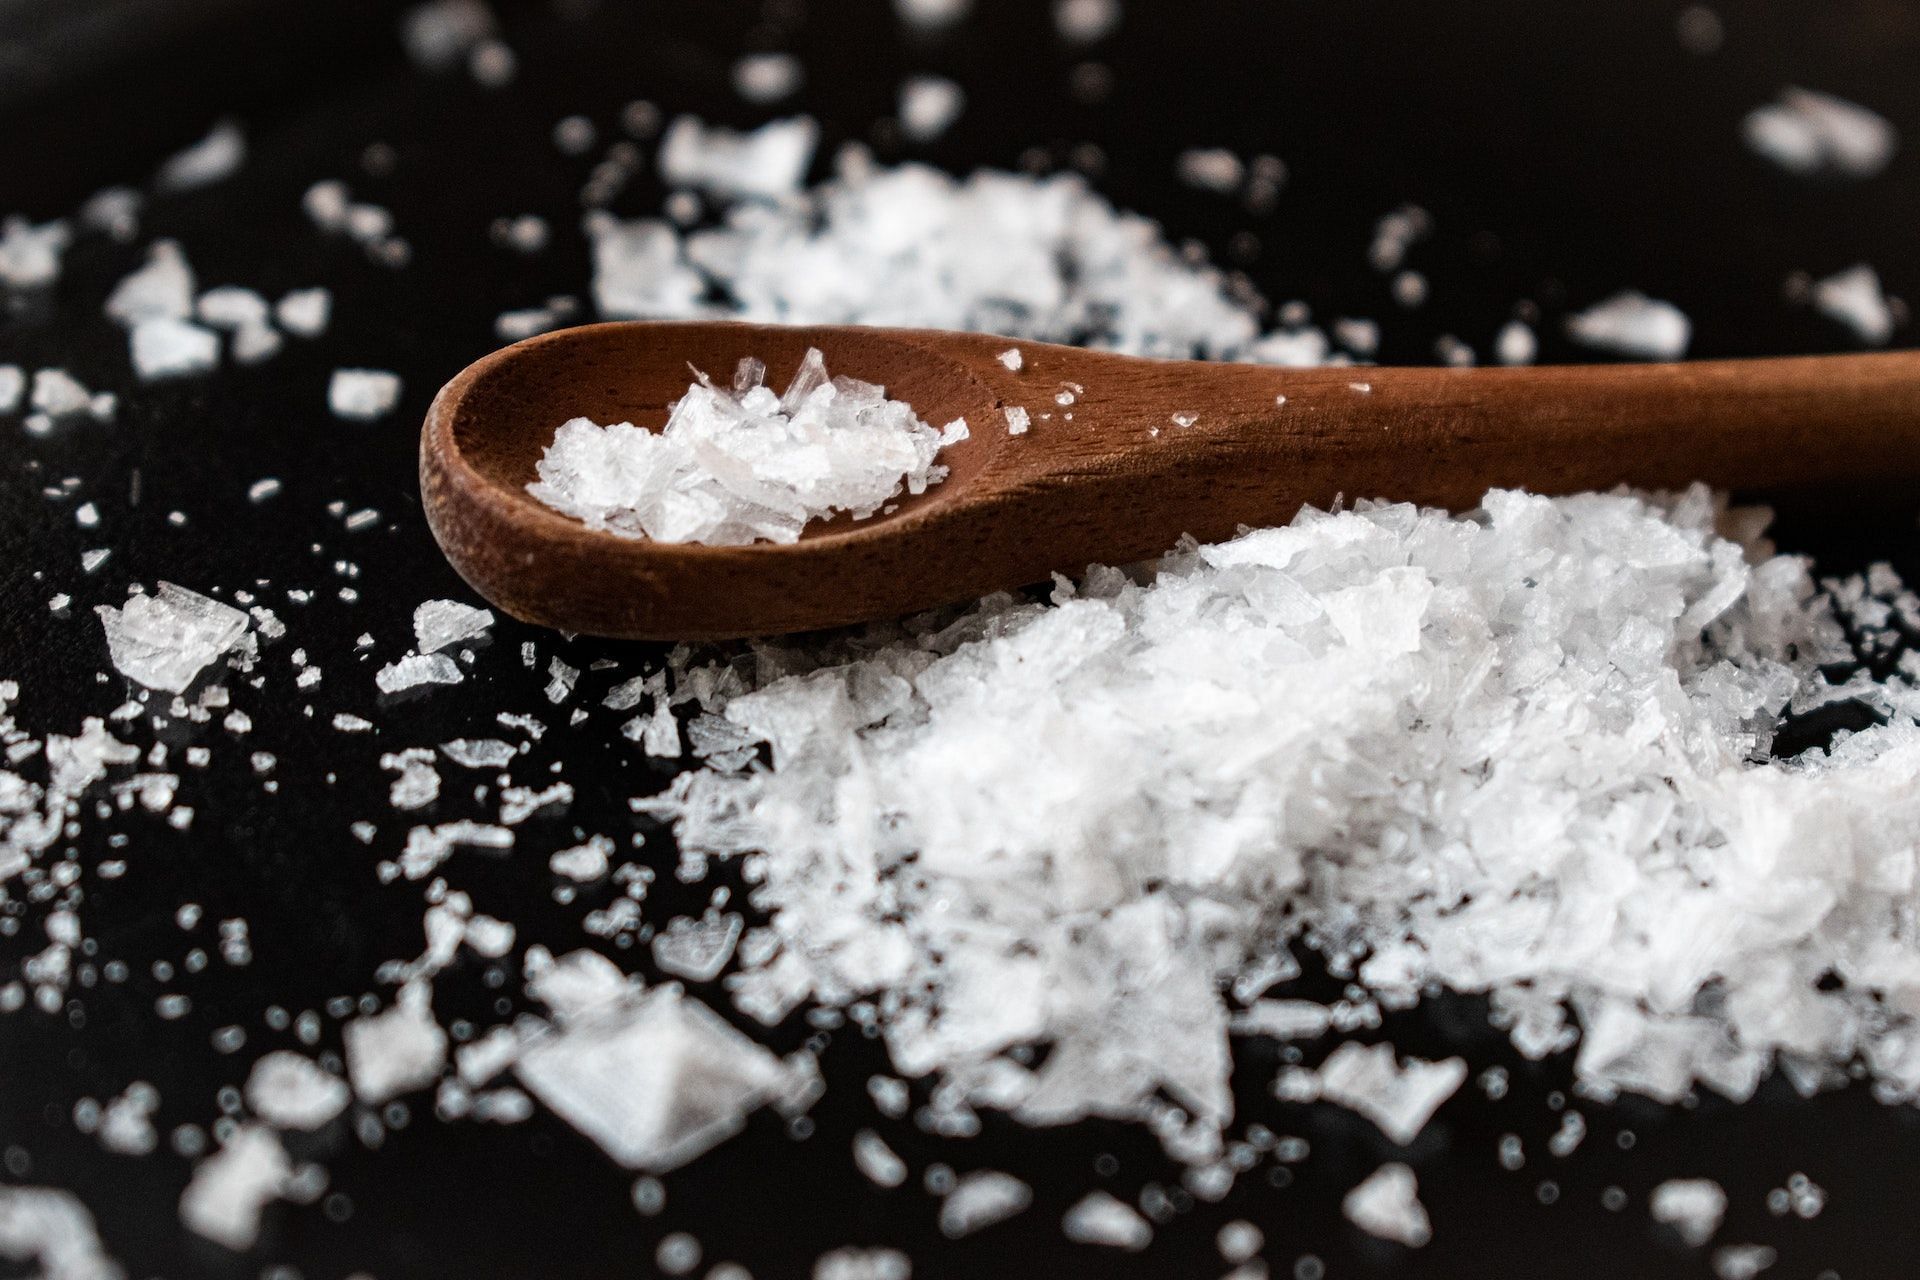 Celtic Sea Salt - Salt for Health